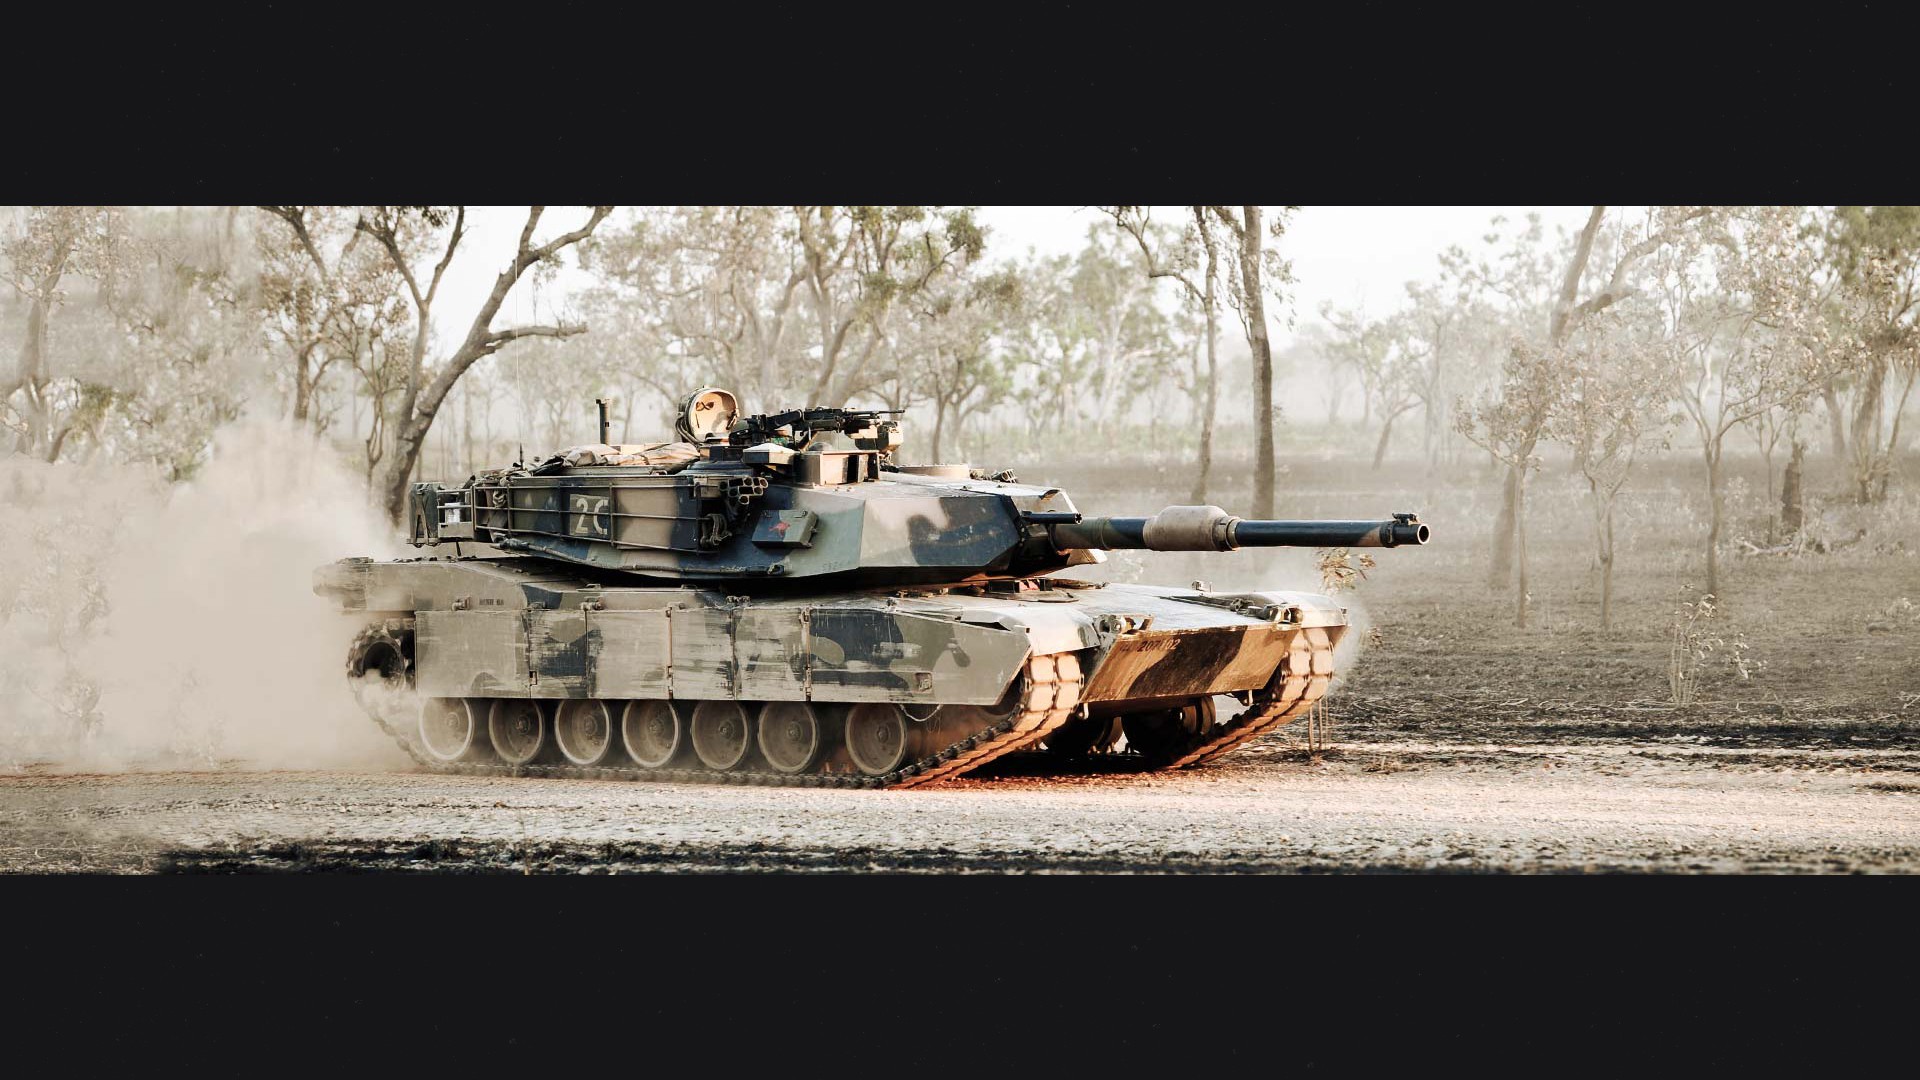 General 1920x1080 army vehicle military tank M1 Abrams